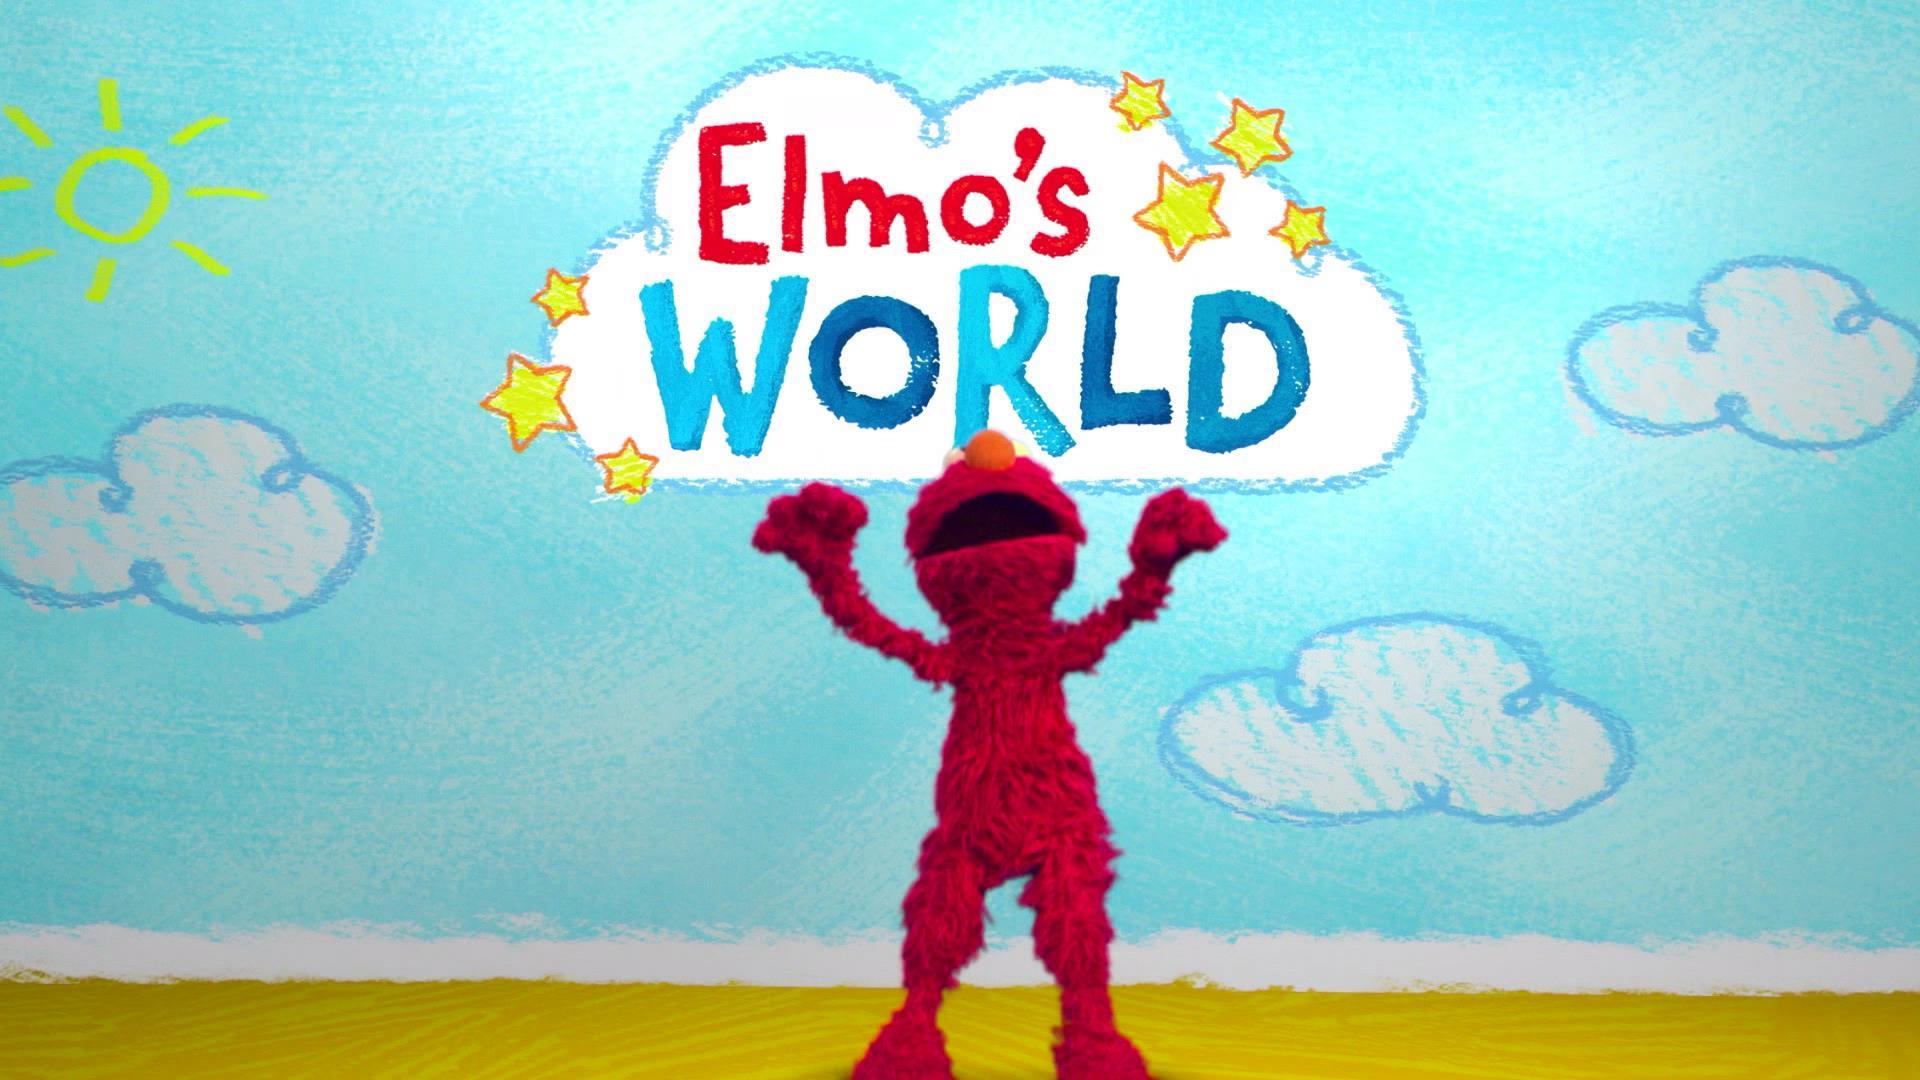 Elmo's World': Get a sneak peek at the new season on 'Sesame...